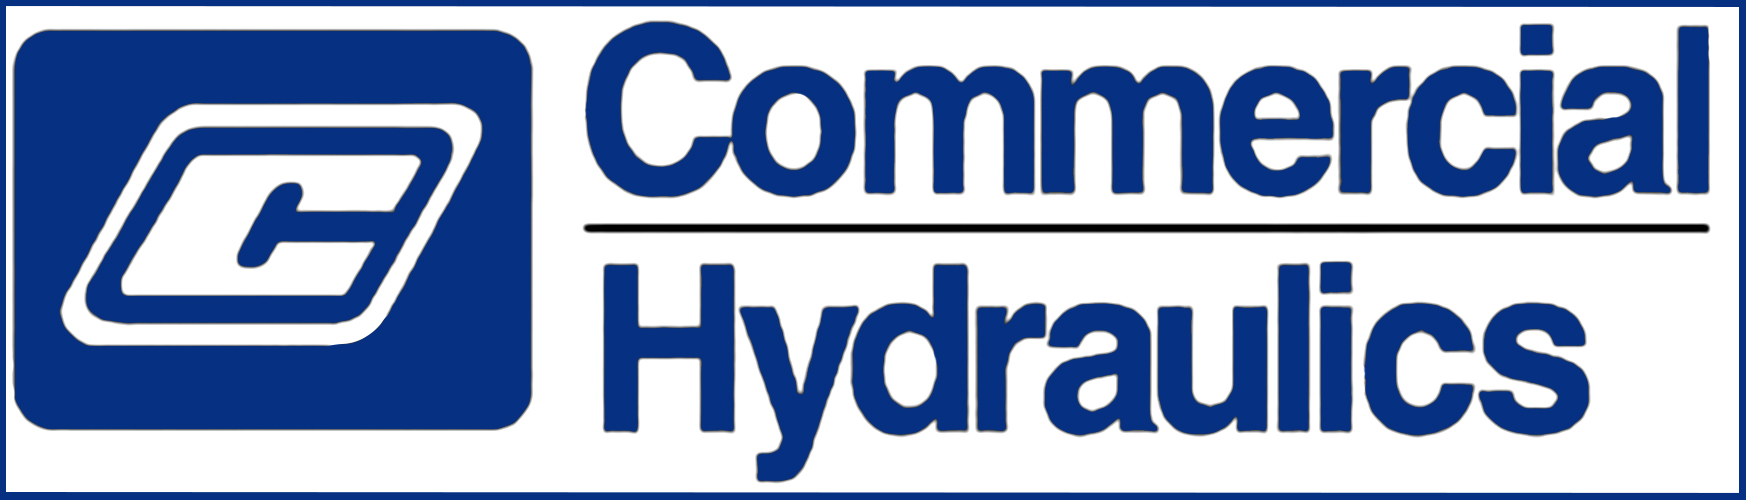 Commercial Hydraulics logo